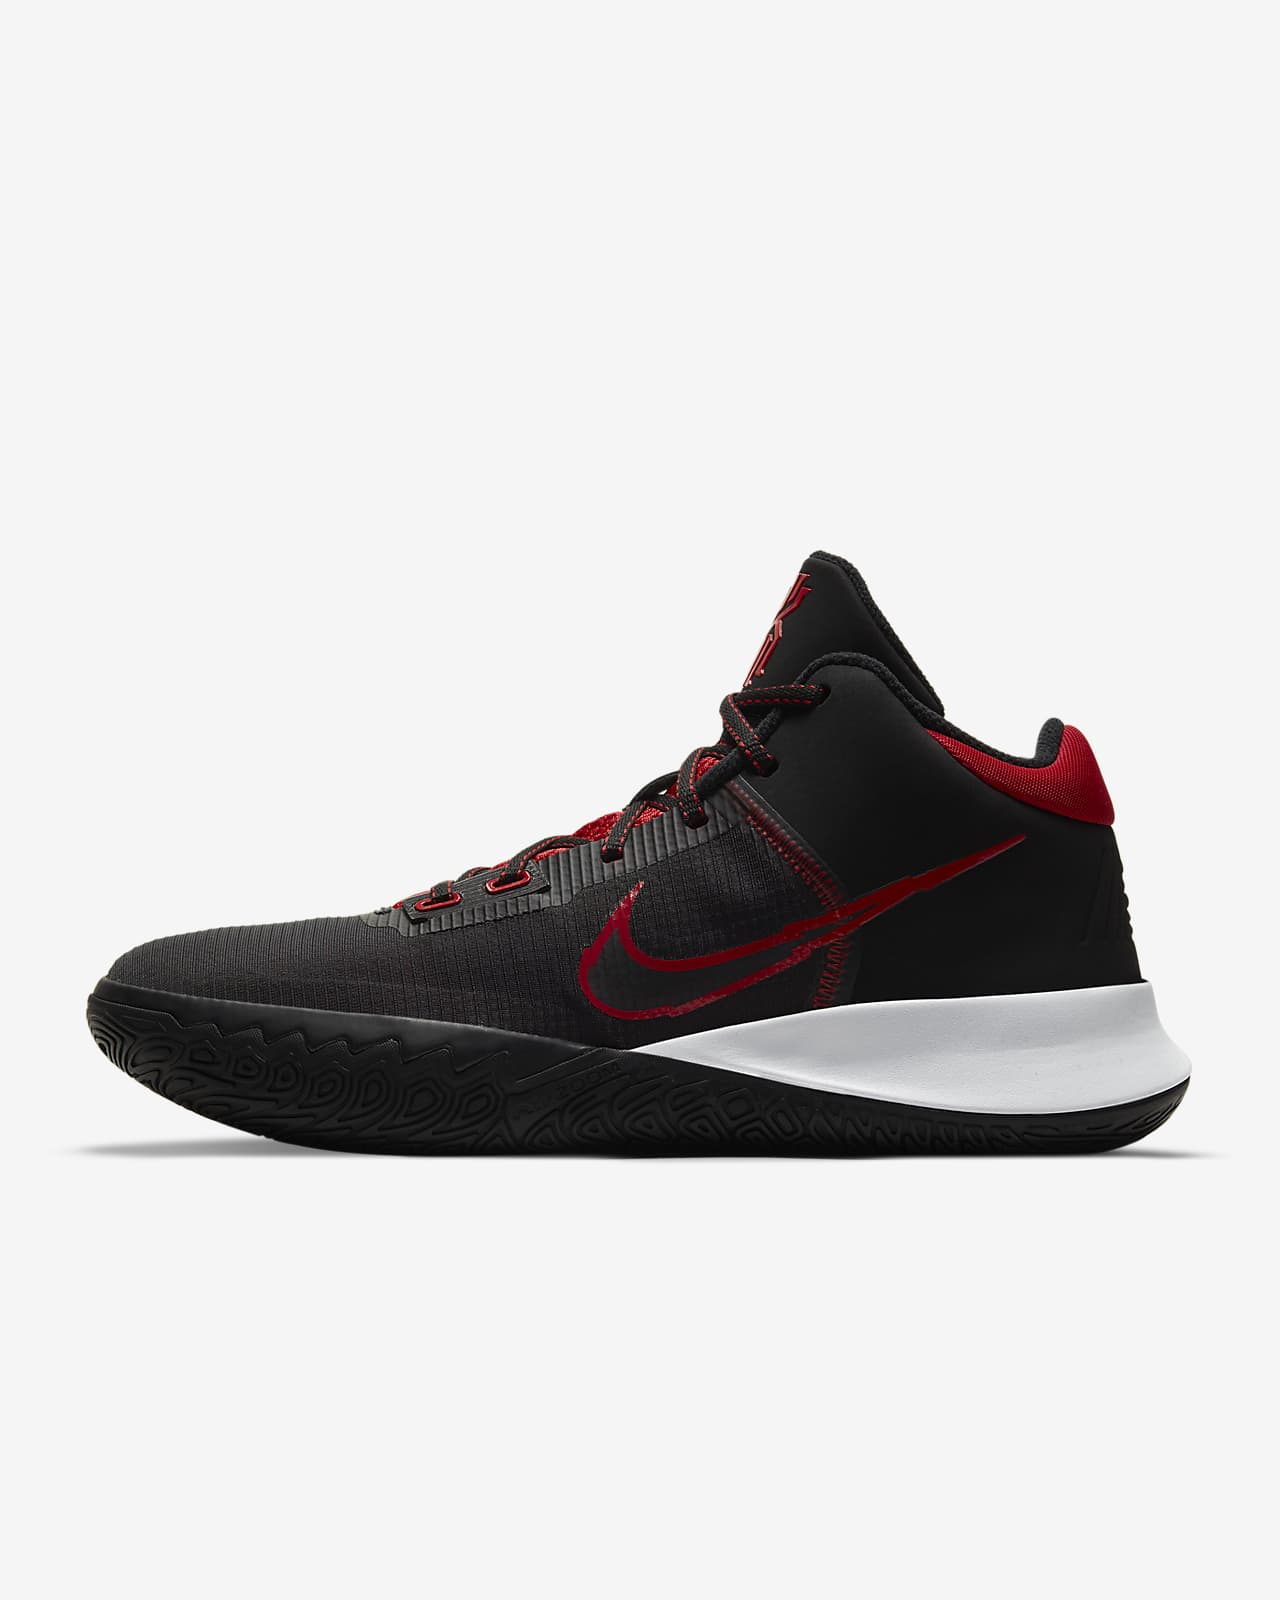 Kyrie Flytrap 4 Basketball Shoe. Nike CA